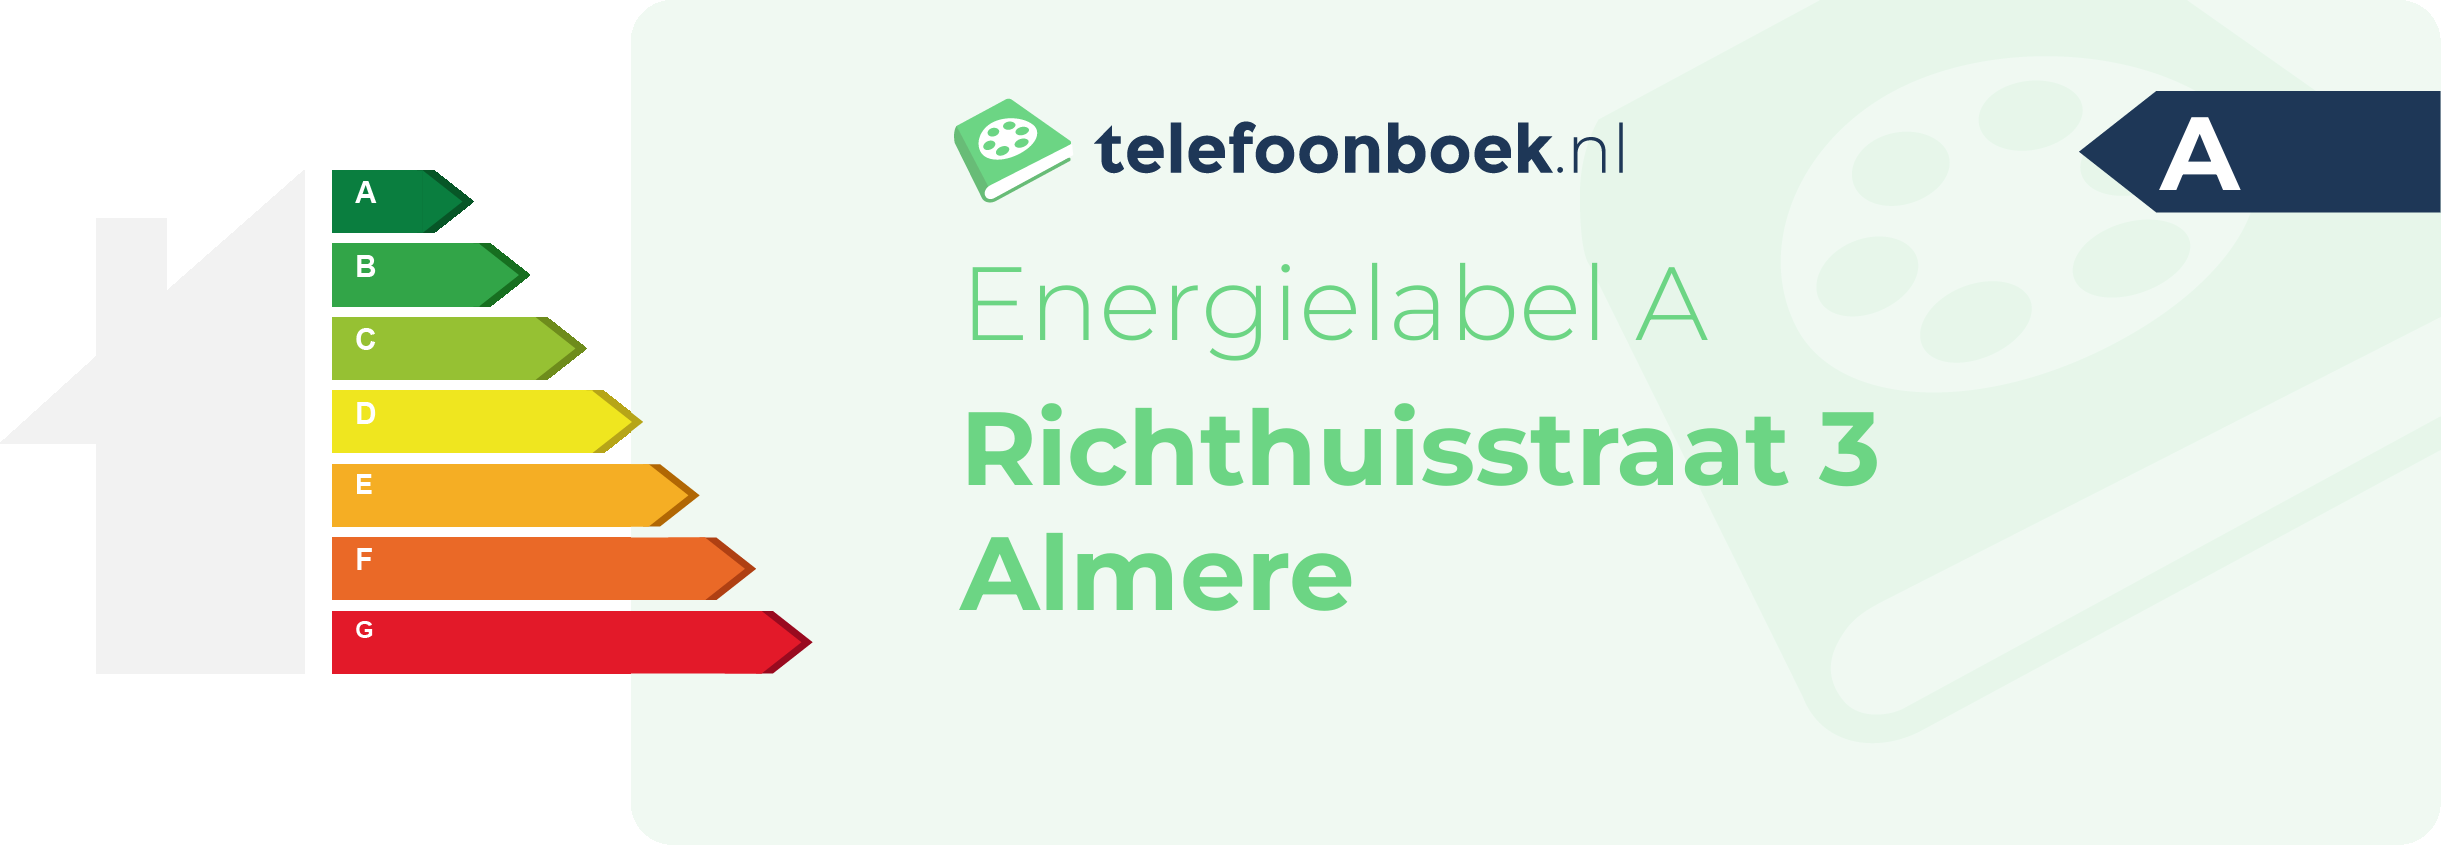 Energielabel Richthuisstraat 3 Almere